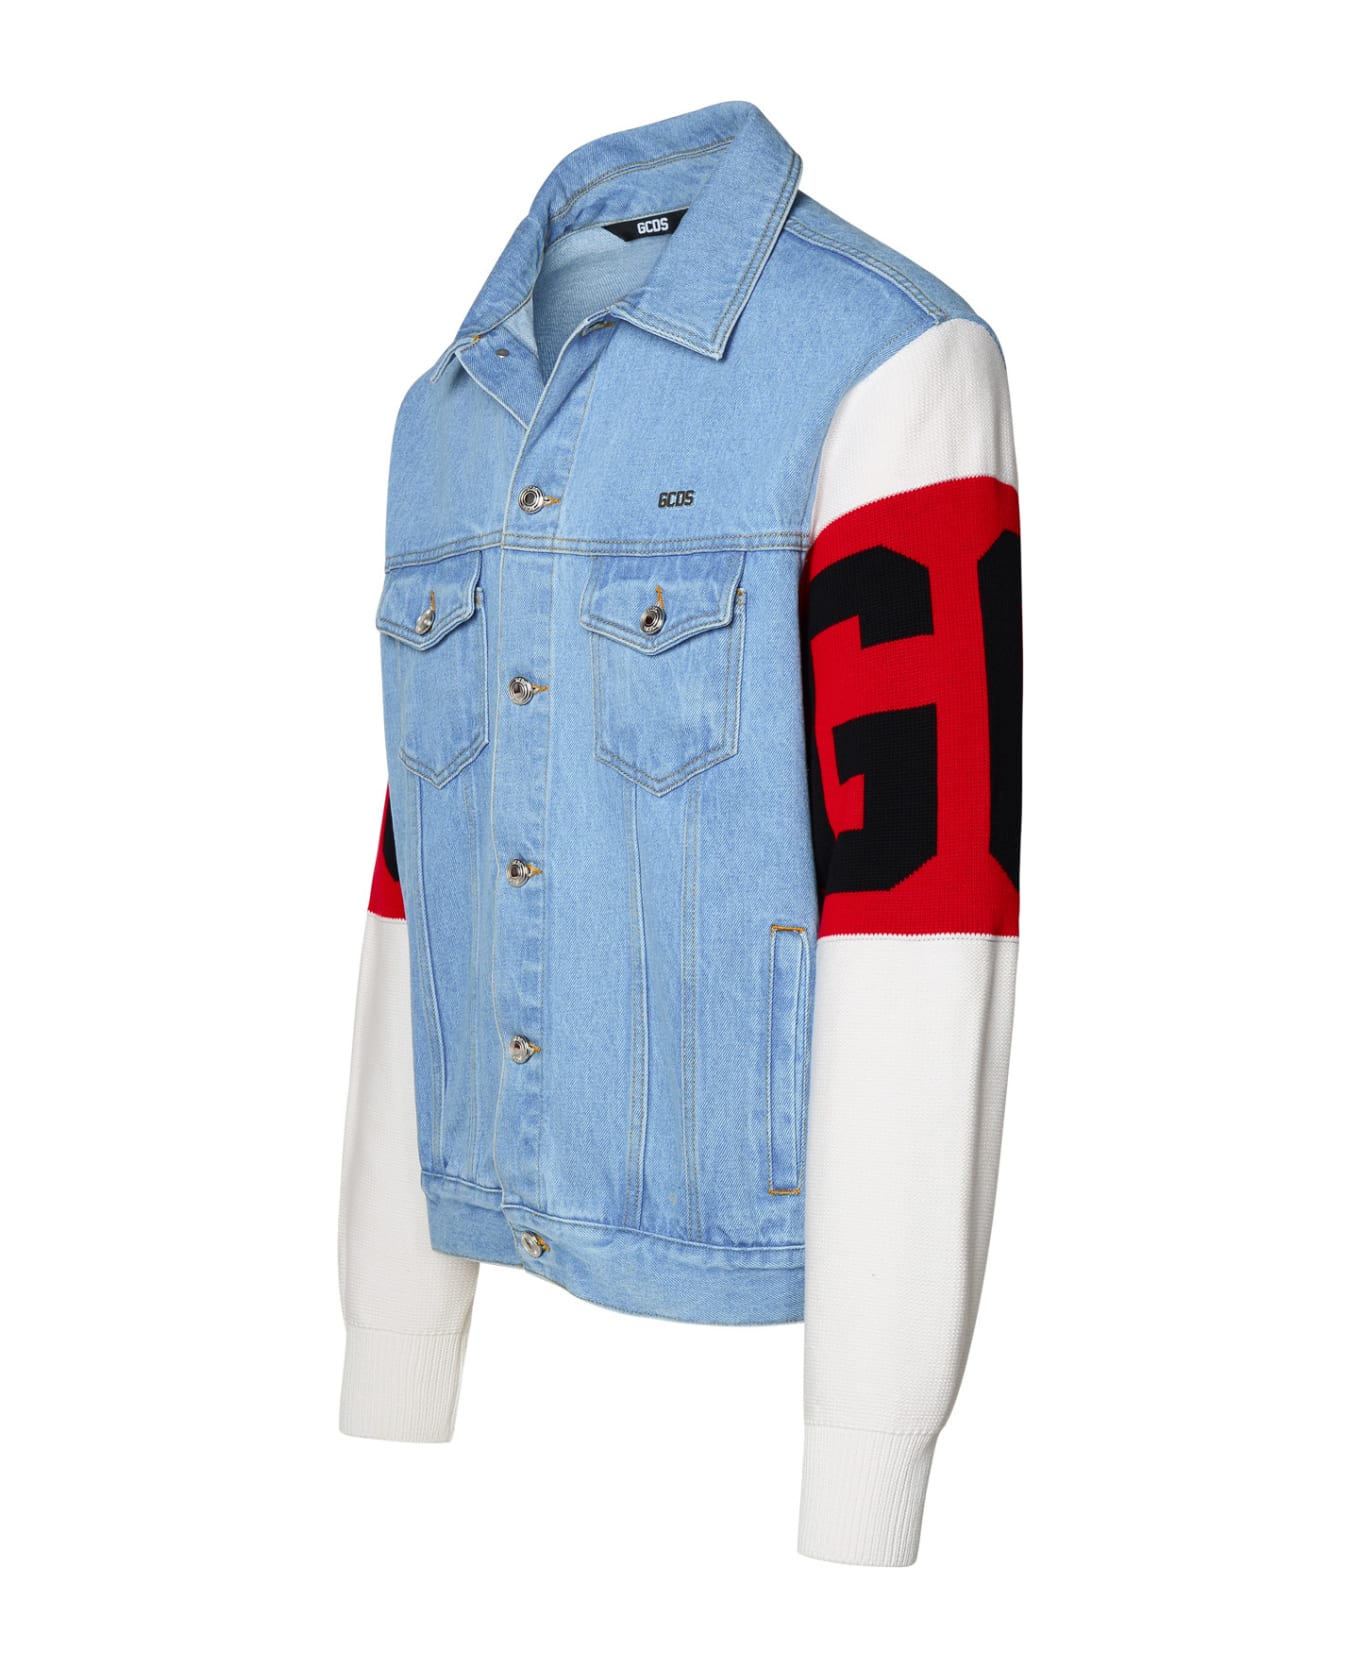 GCDS Multicolor Cotton Jacket - Light Blue ジャケット